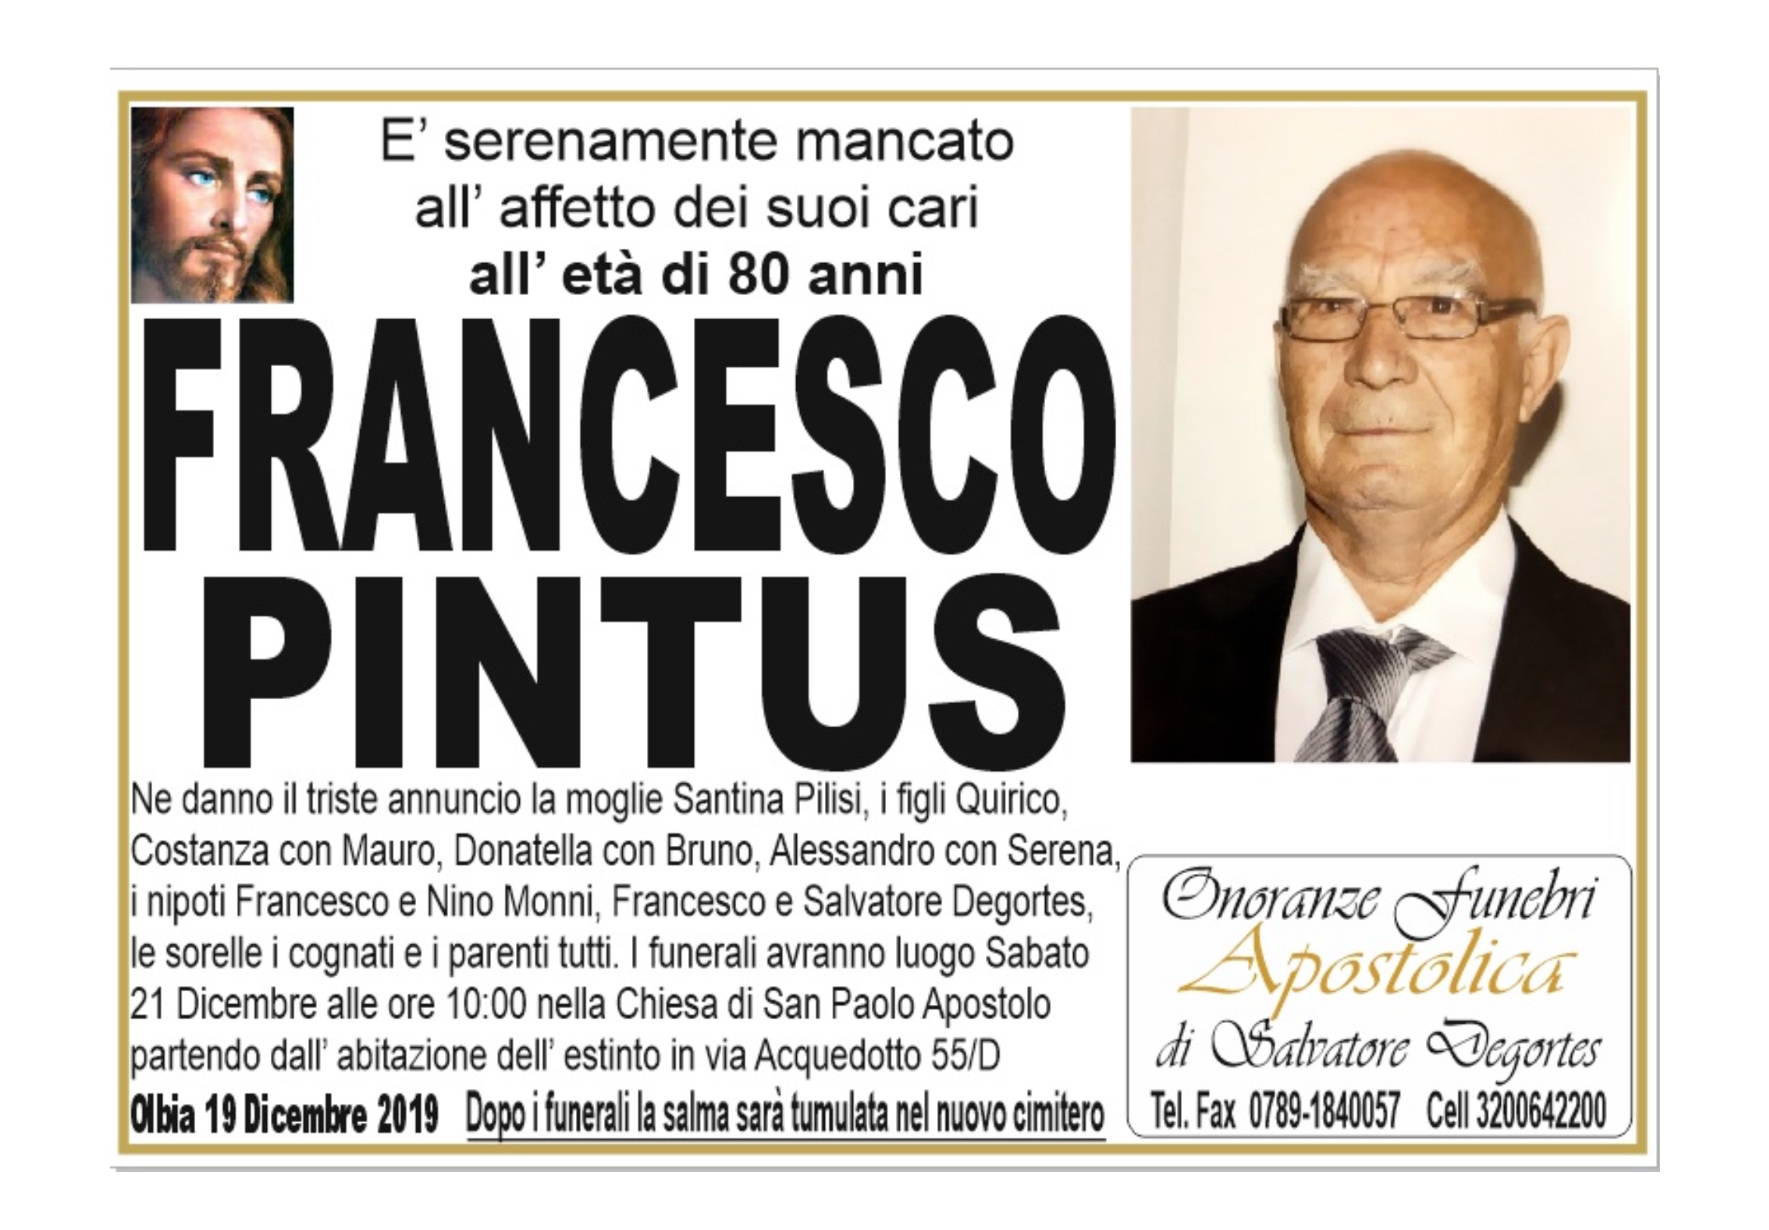 Francesco Pintus